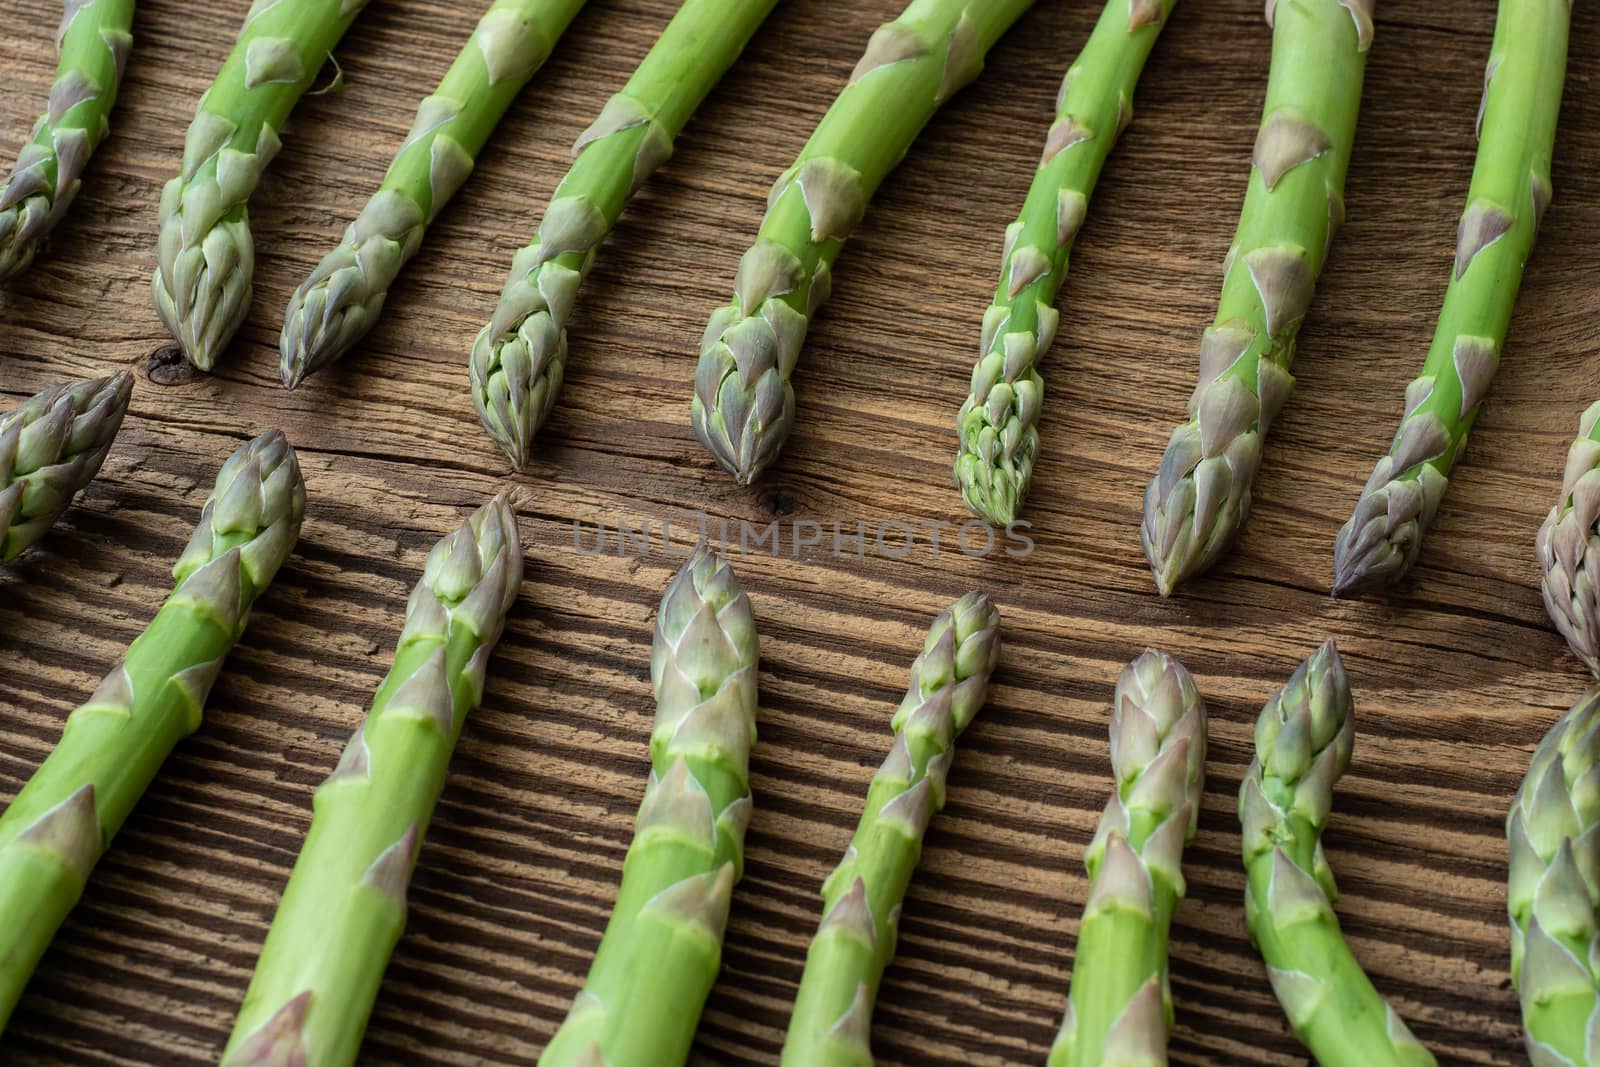 Raw garden asparagus stems. Fresh green spring vegetables on woo by xtrekx